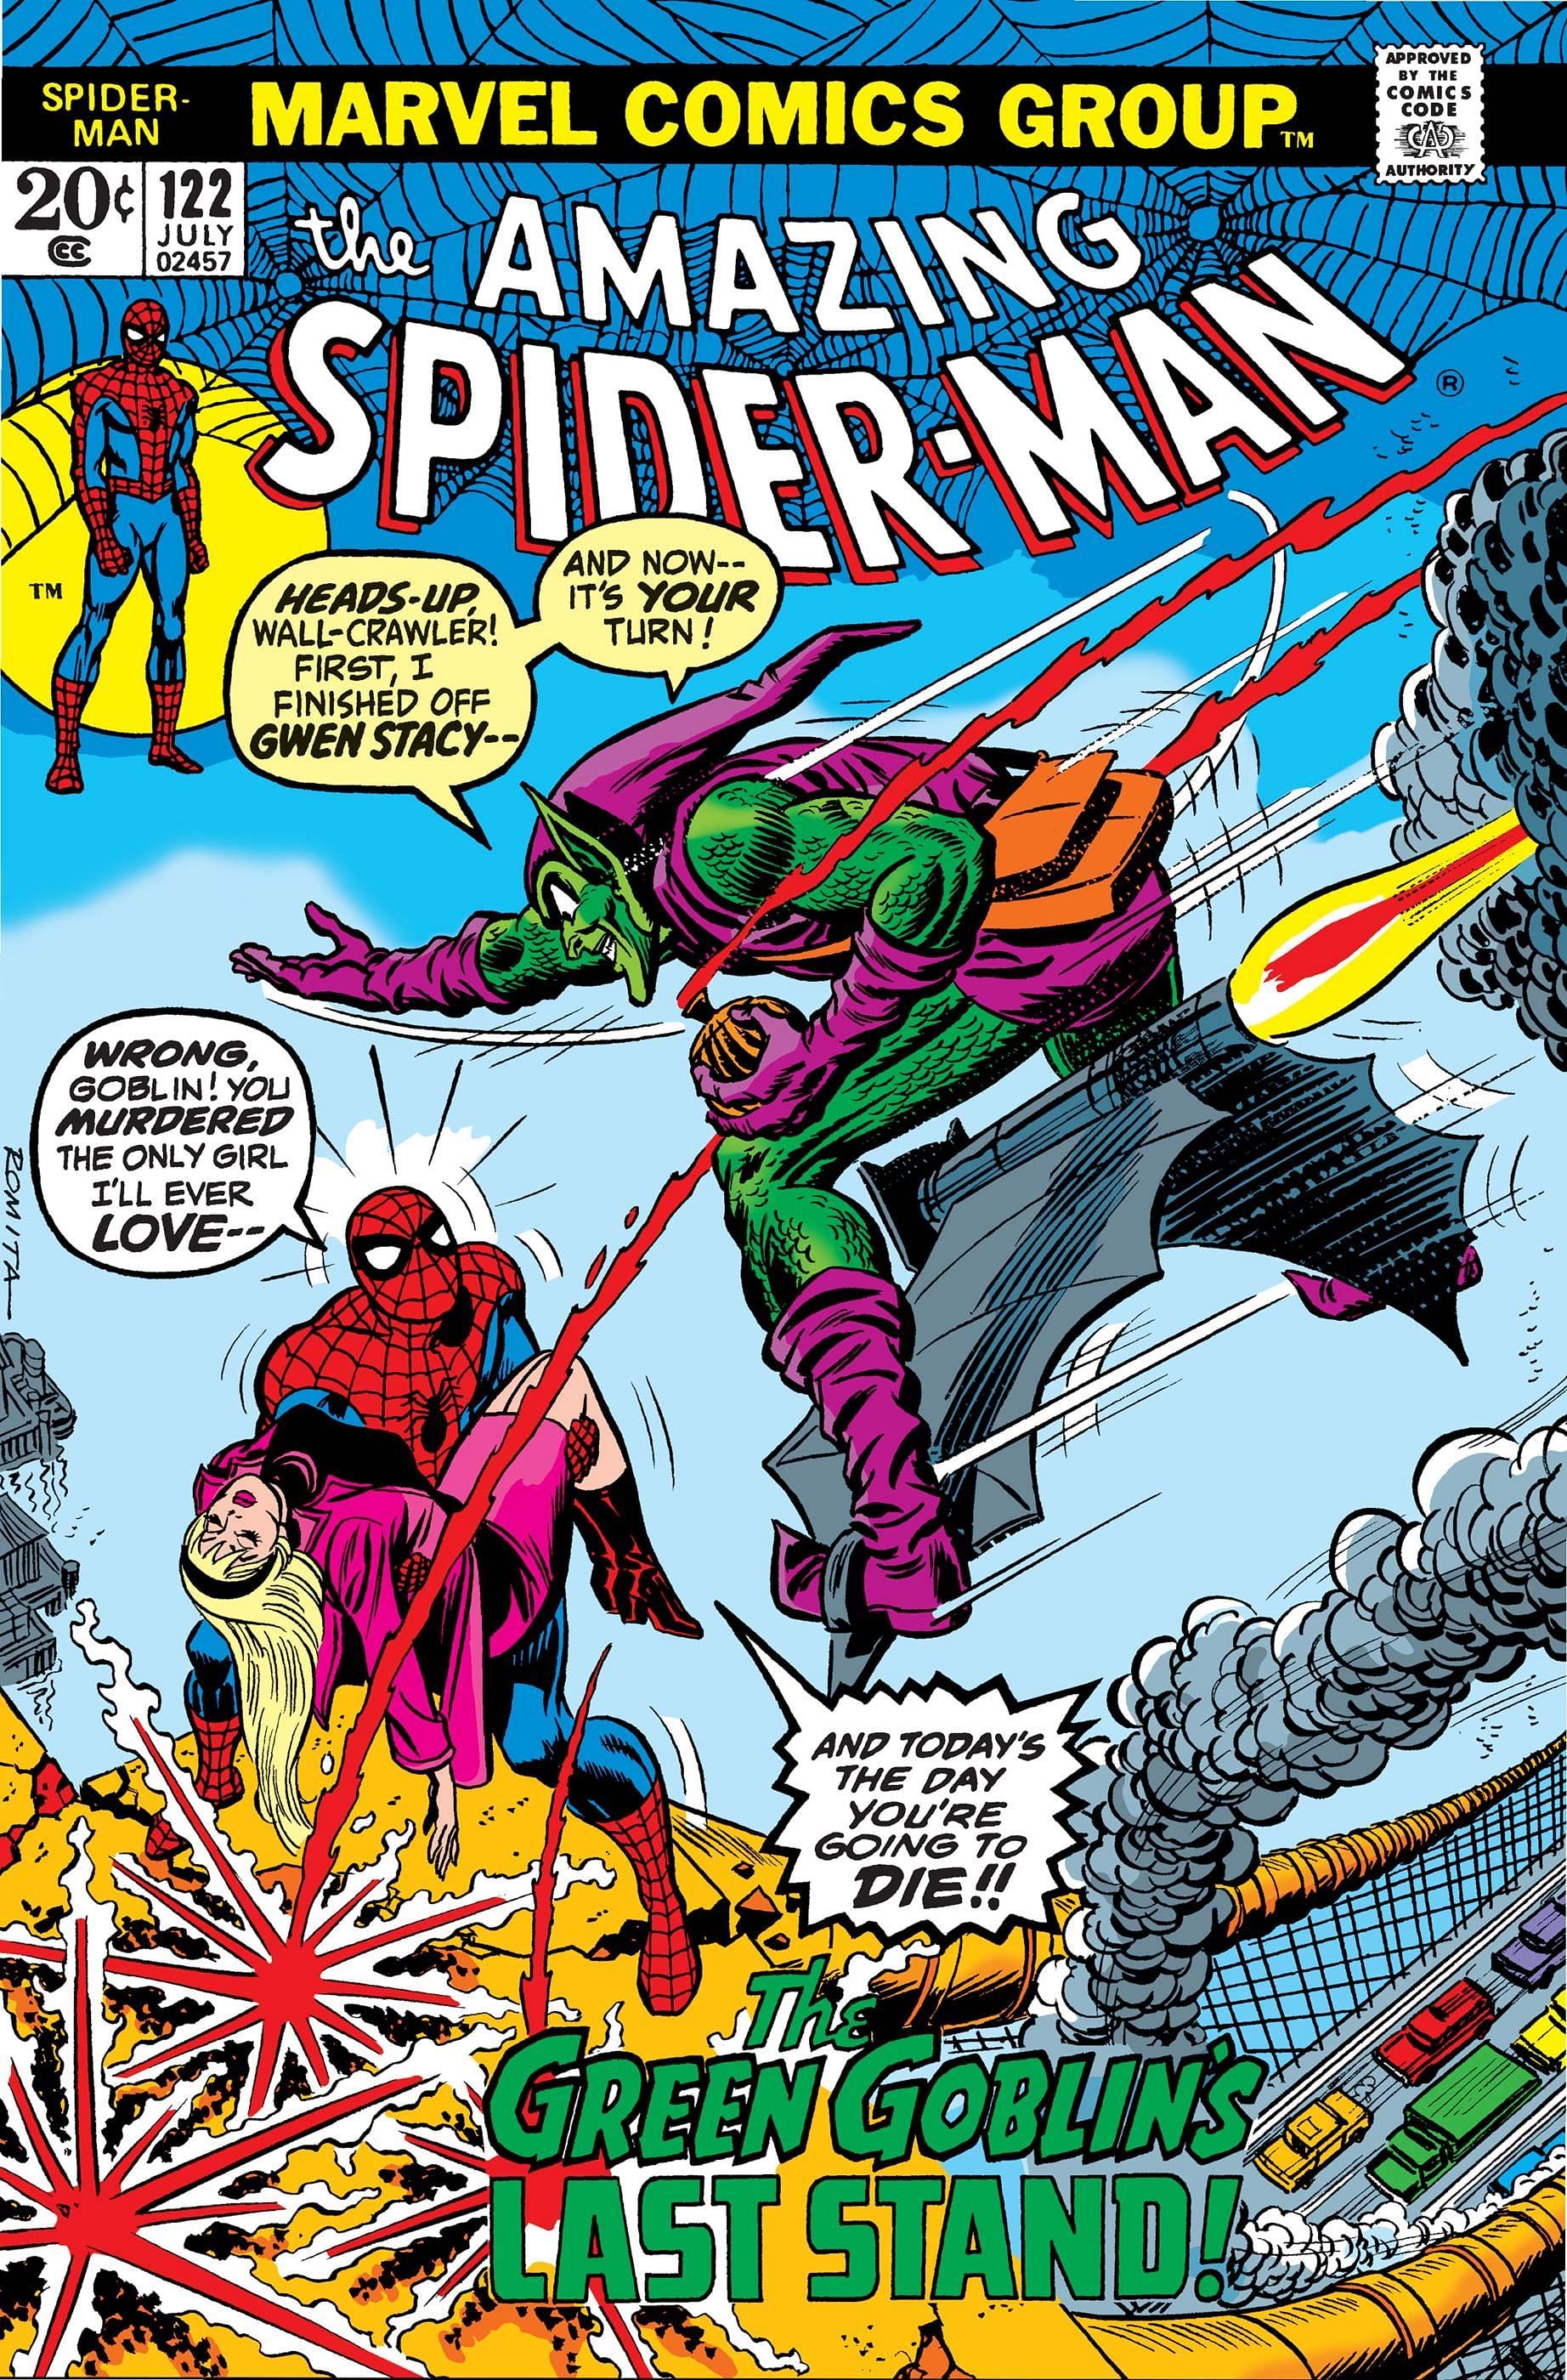 The Amazing Spider-Man #122 (Image via Marvel Comics)